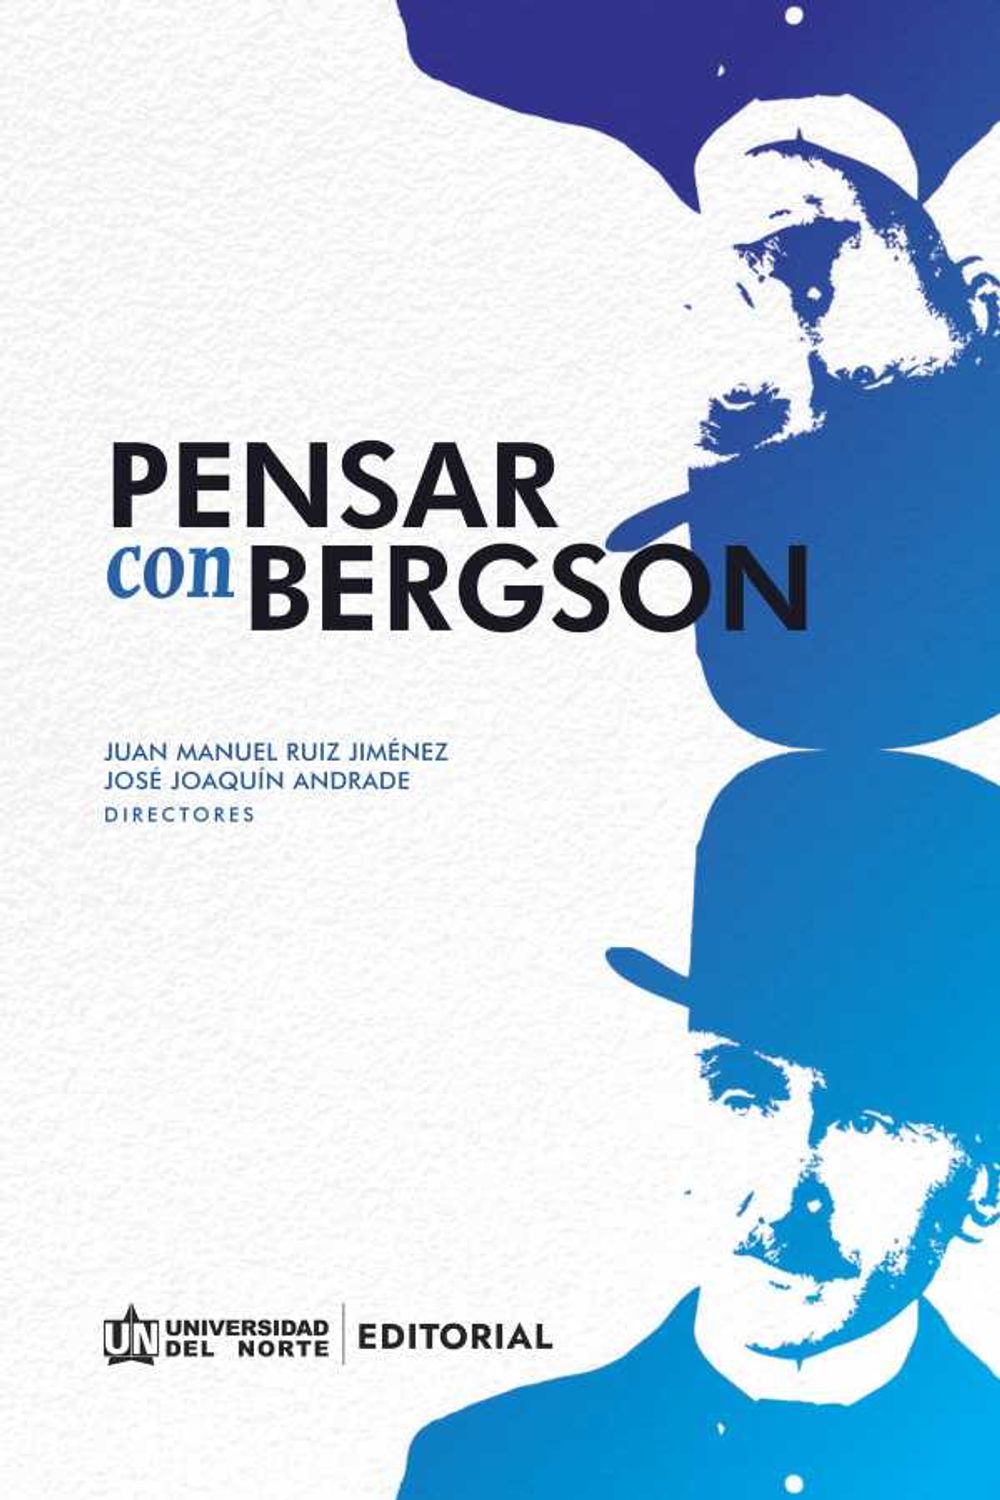 bw-pensar-con-bergson-u-del-norte-editorial-9789587892789